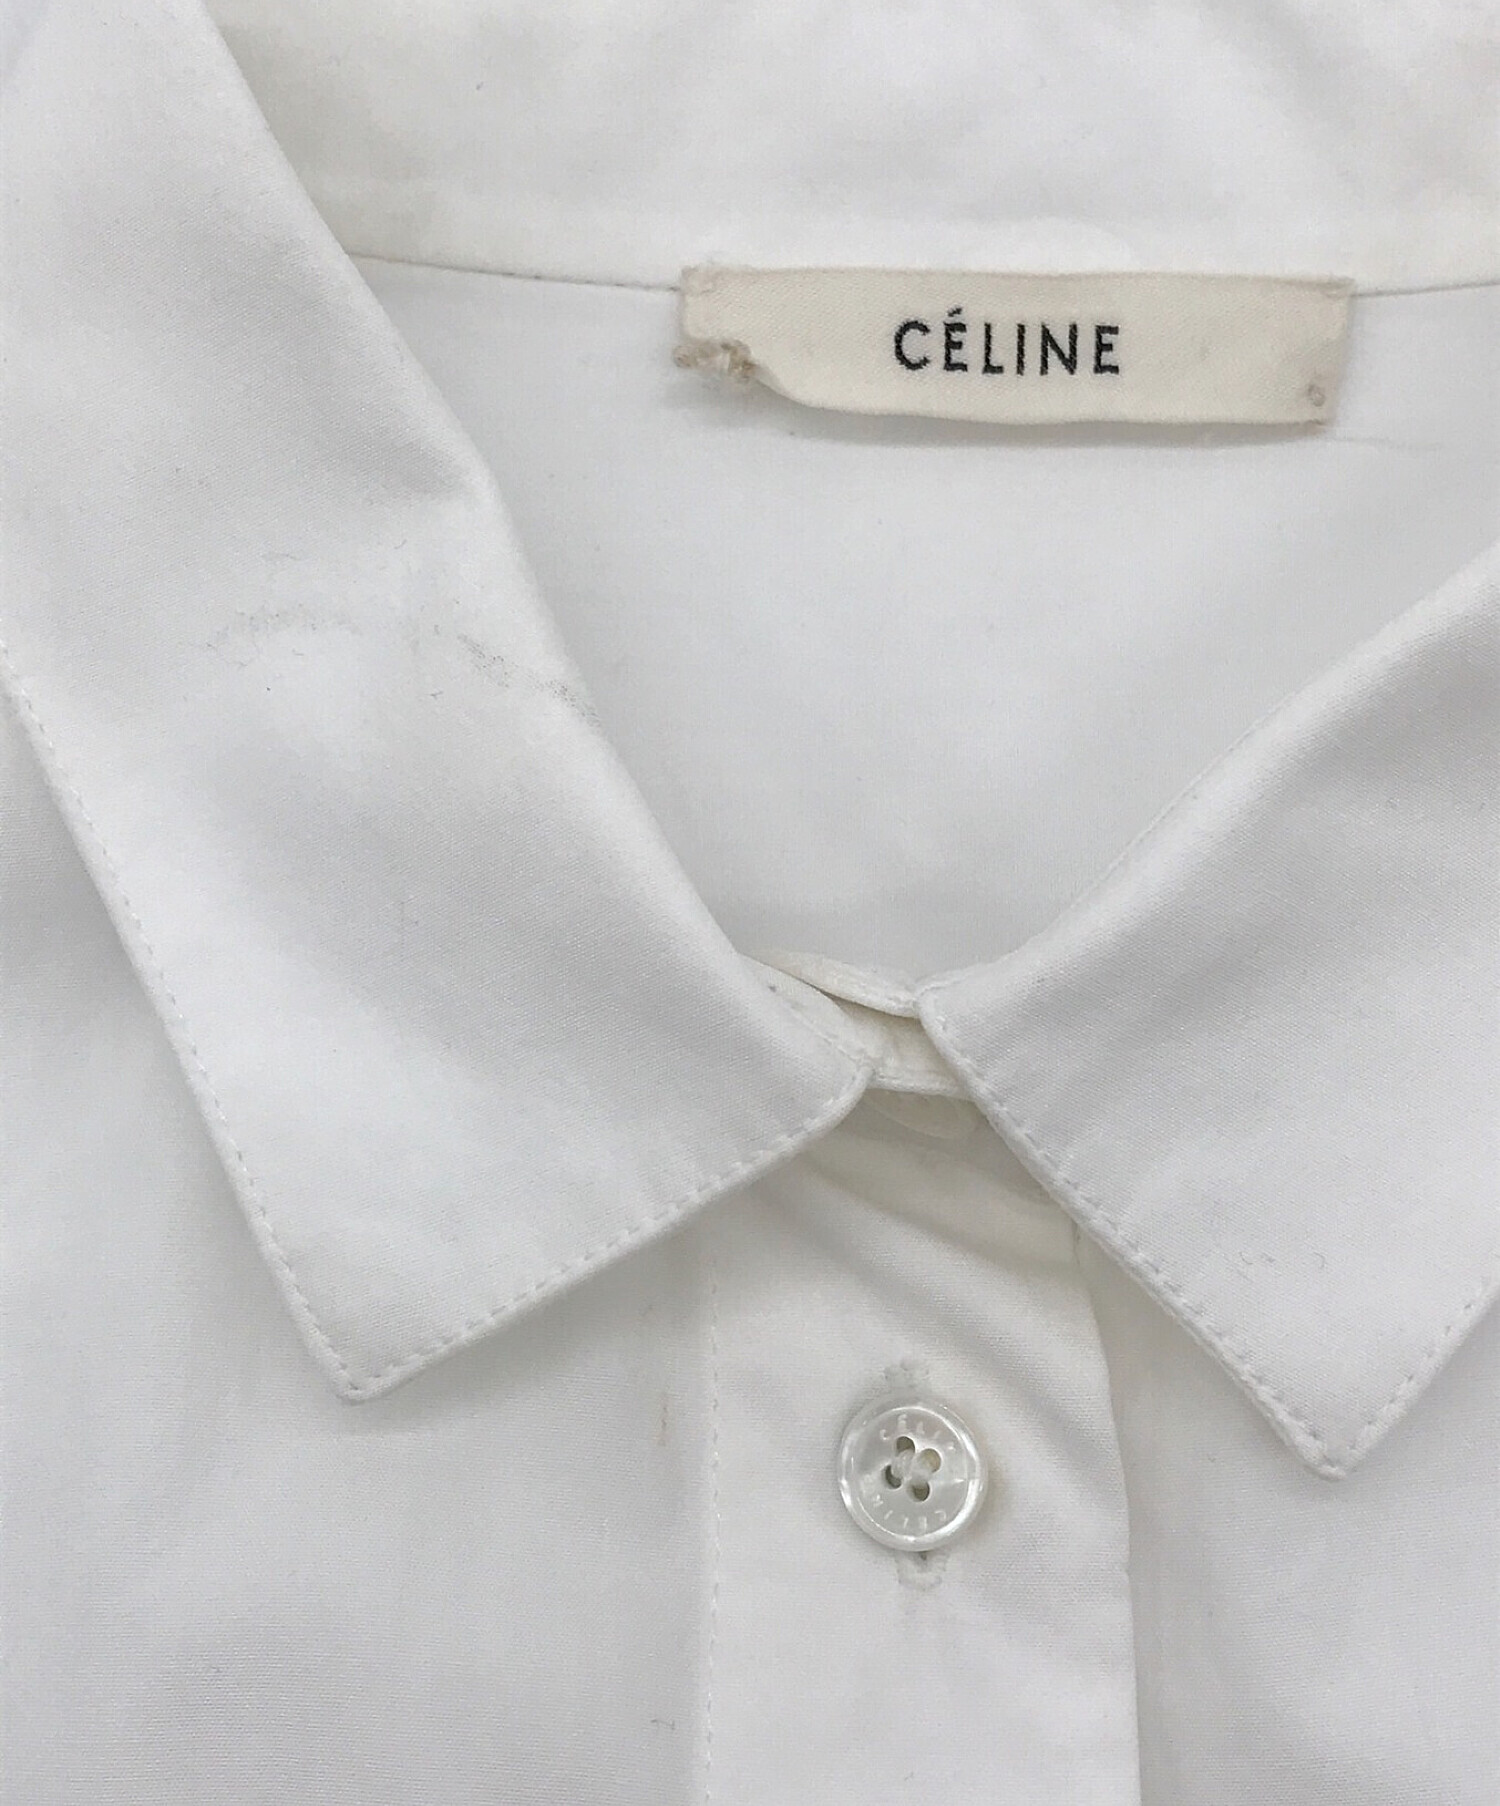 CELINE (セリーヌ) ロングスリーブバイカラーシャツ ホワイト×ブルー サイズ:38